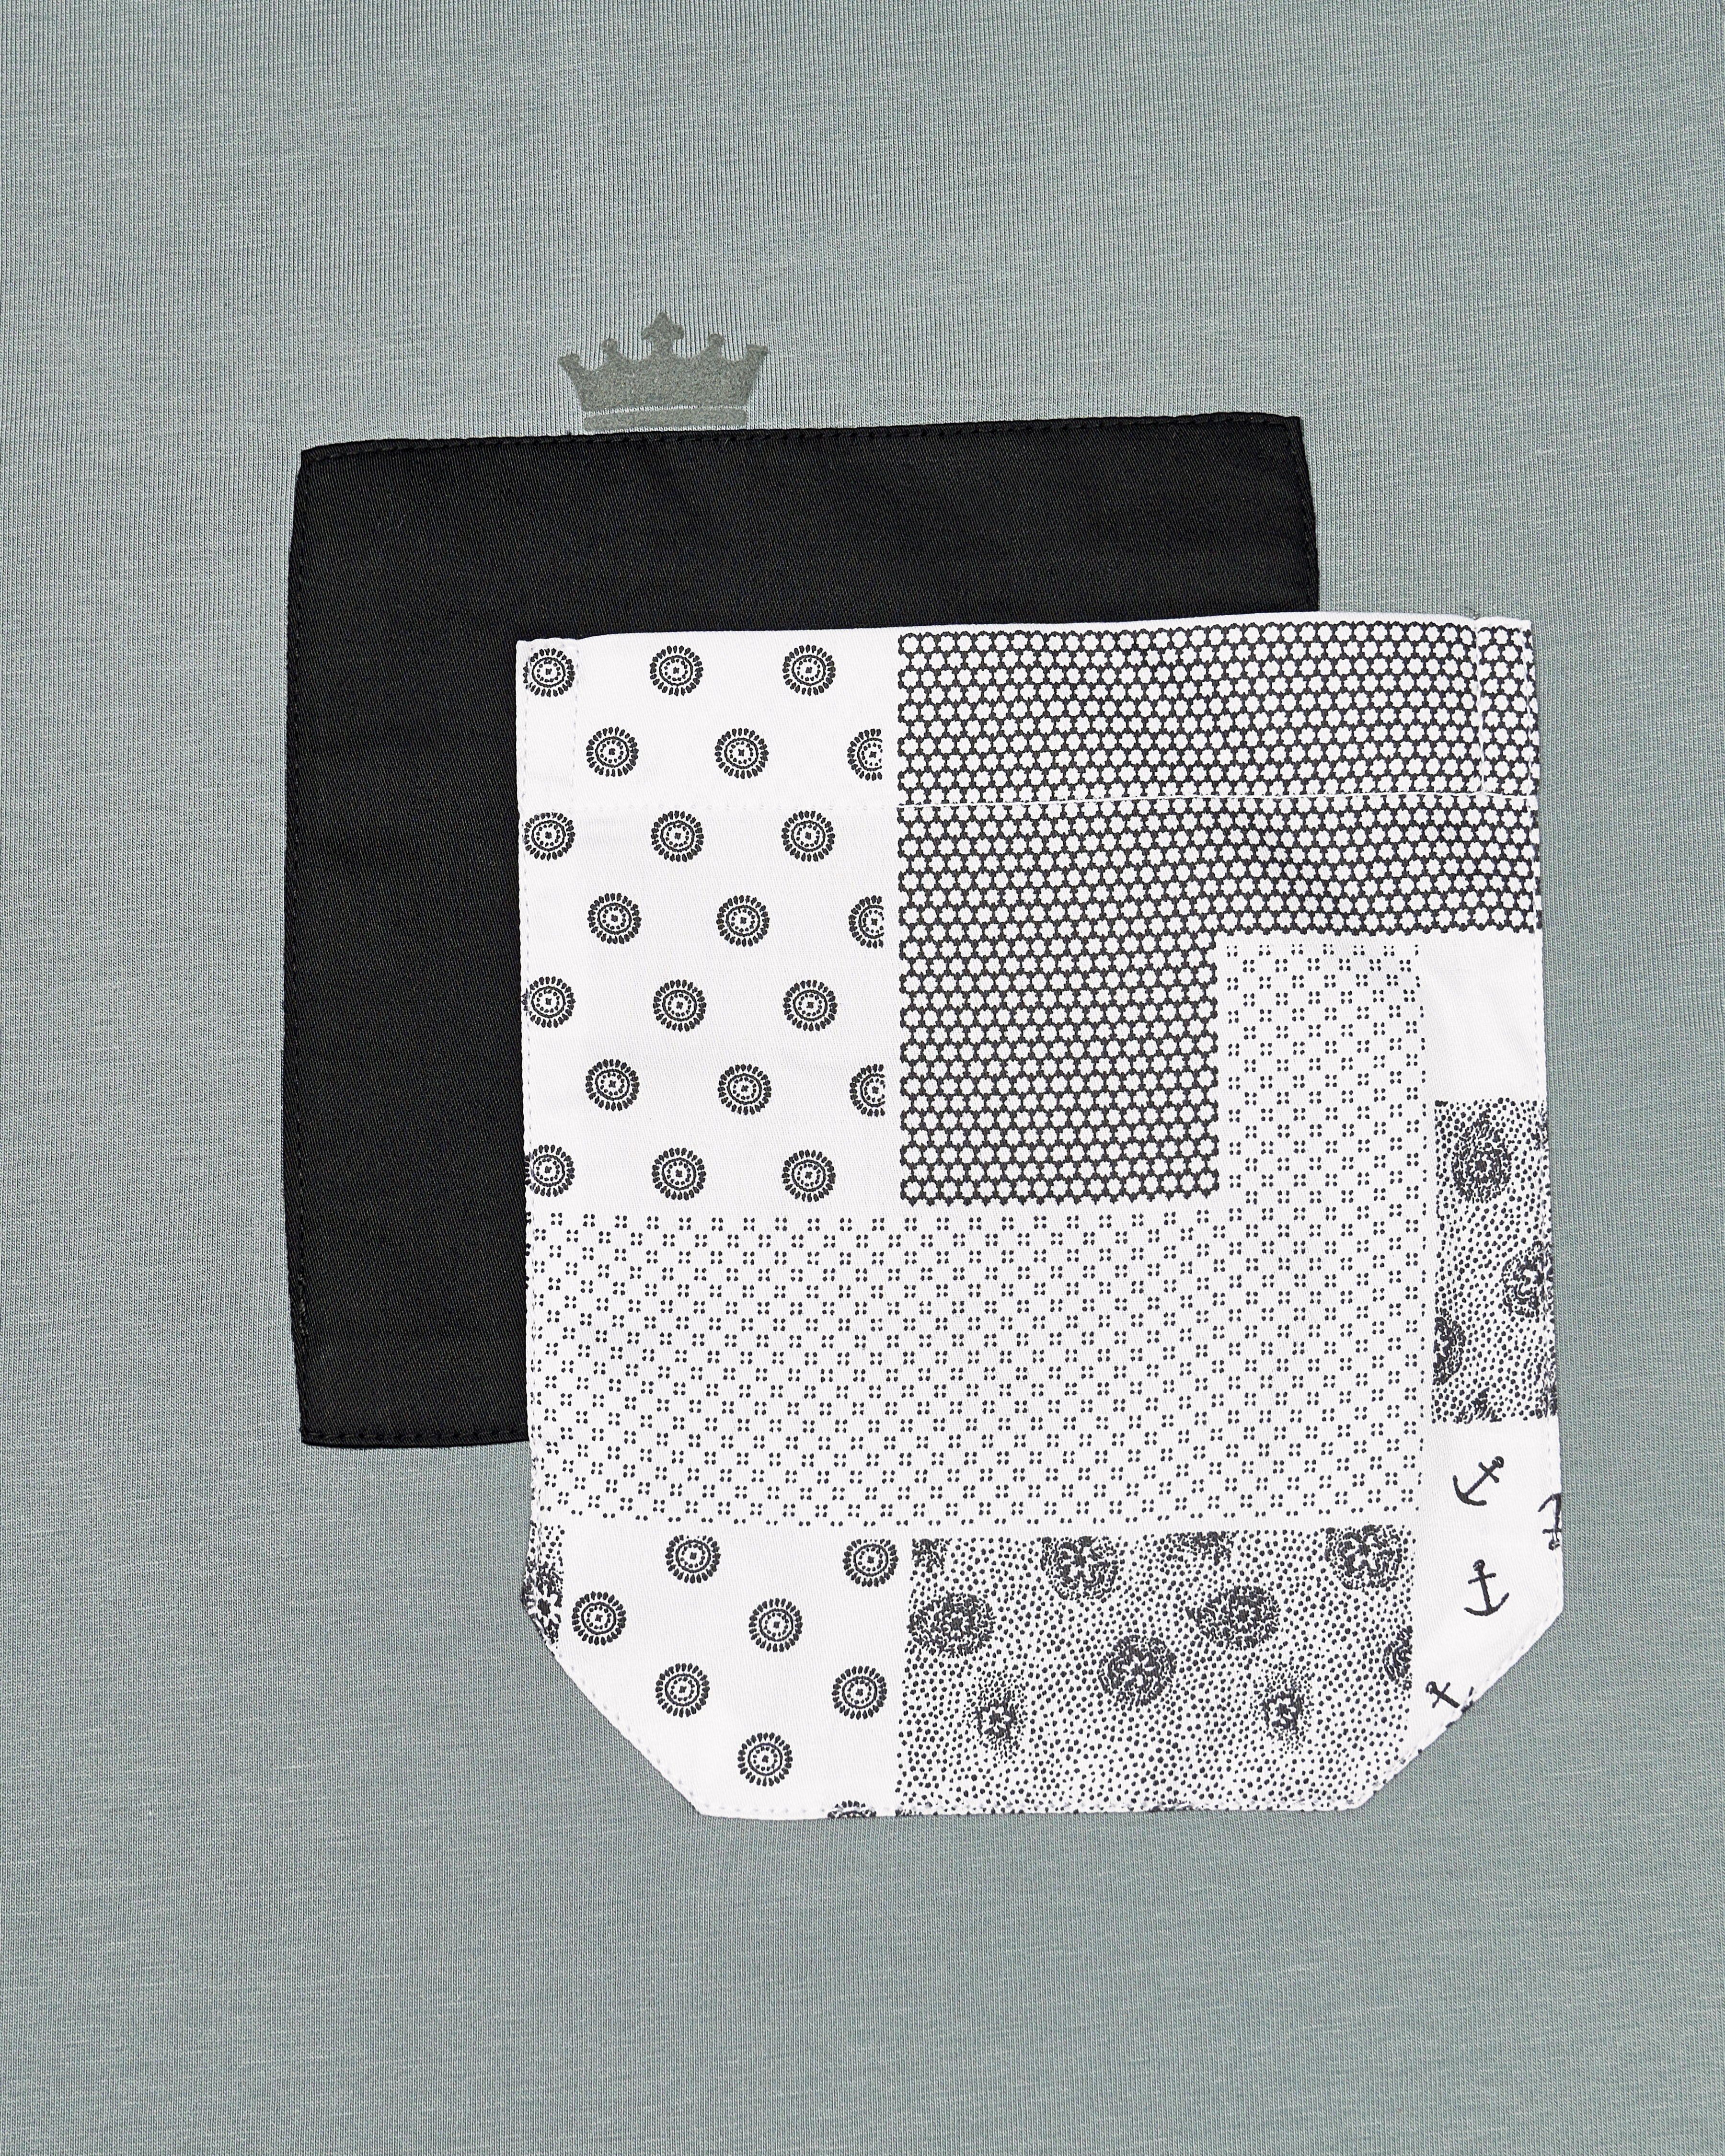 Dawn Gray with Black and White Patch Pocket Premium Organic Cotton Designer T-shirt TS009-W01-S, TS009-W01-M, TS009-W01-L, TS009-W01-XL, TS009-W01-XXL